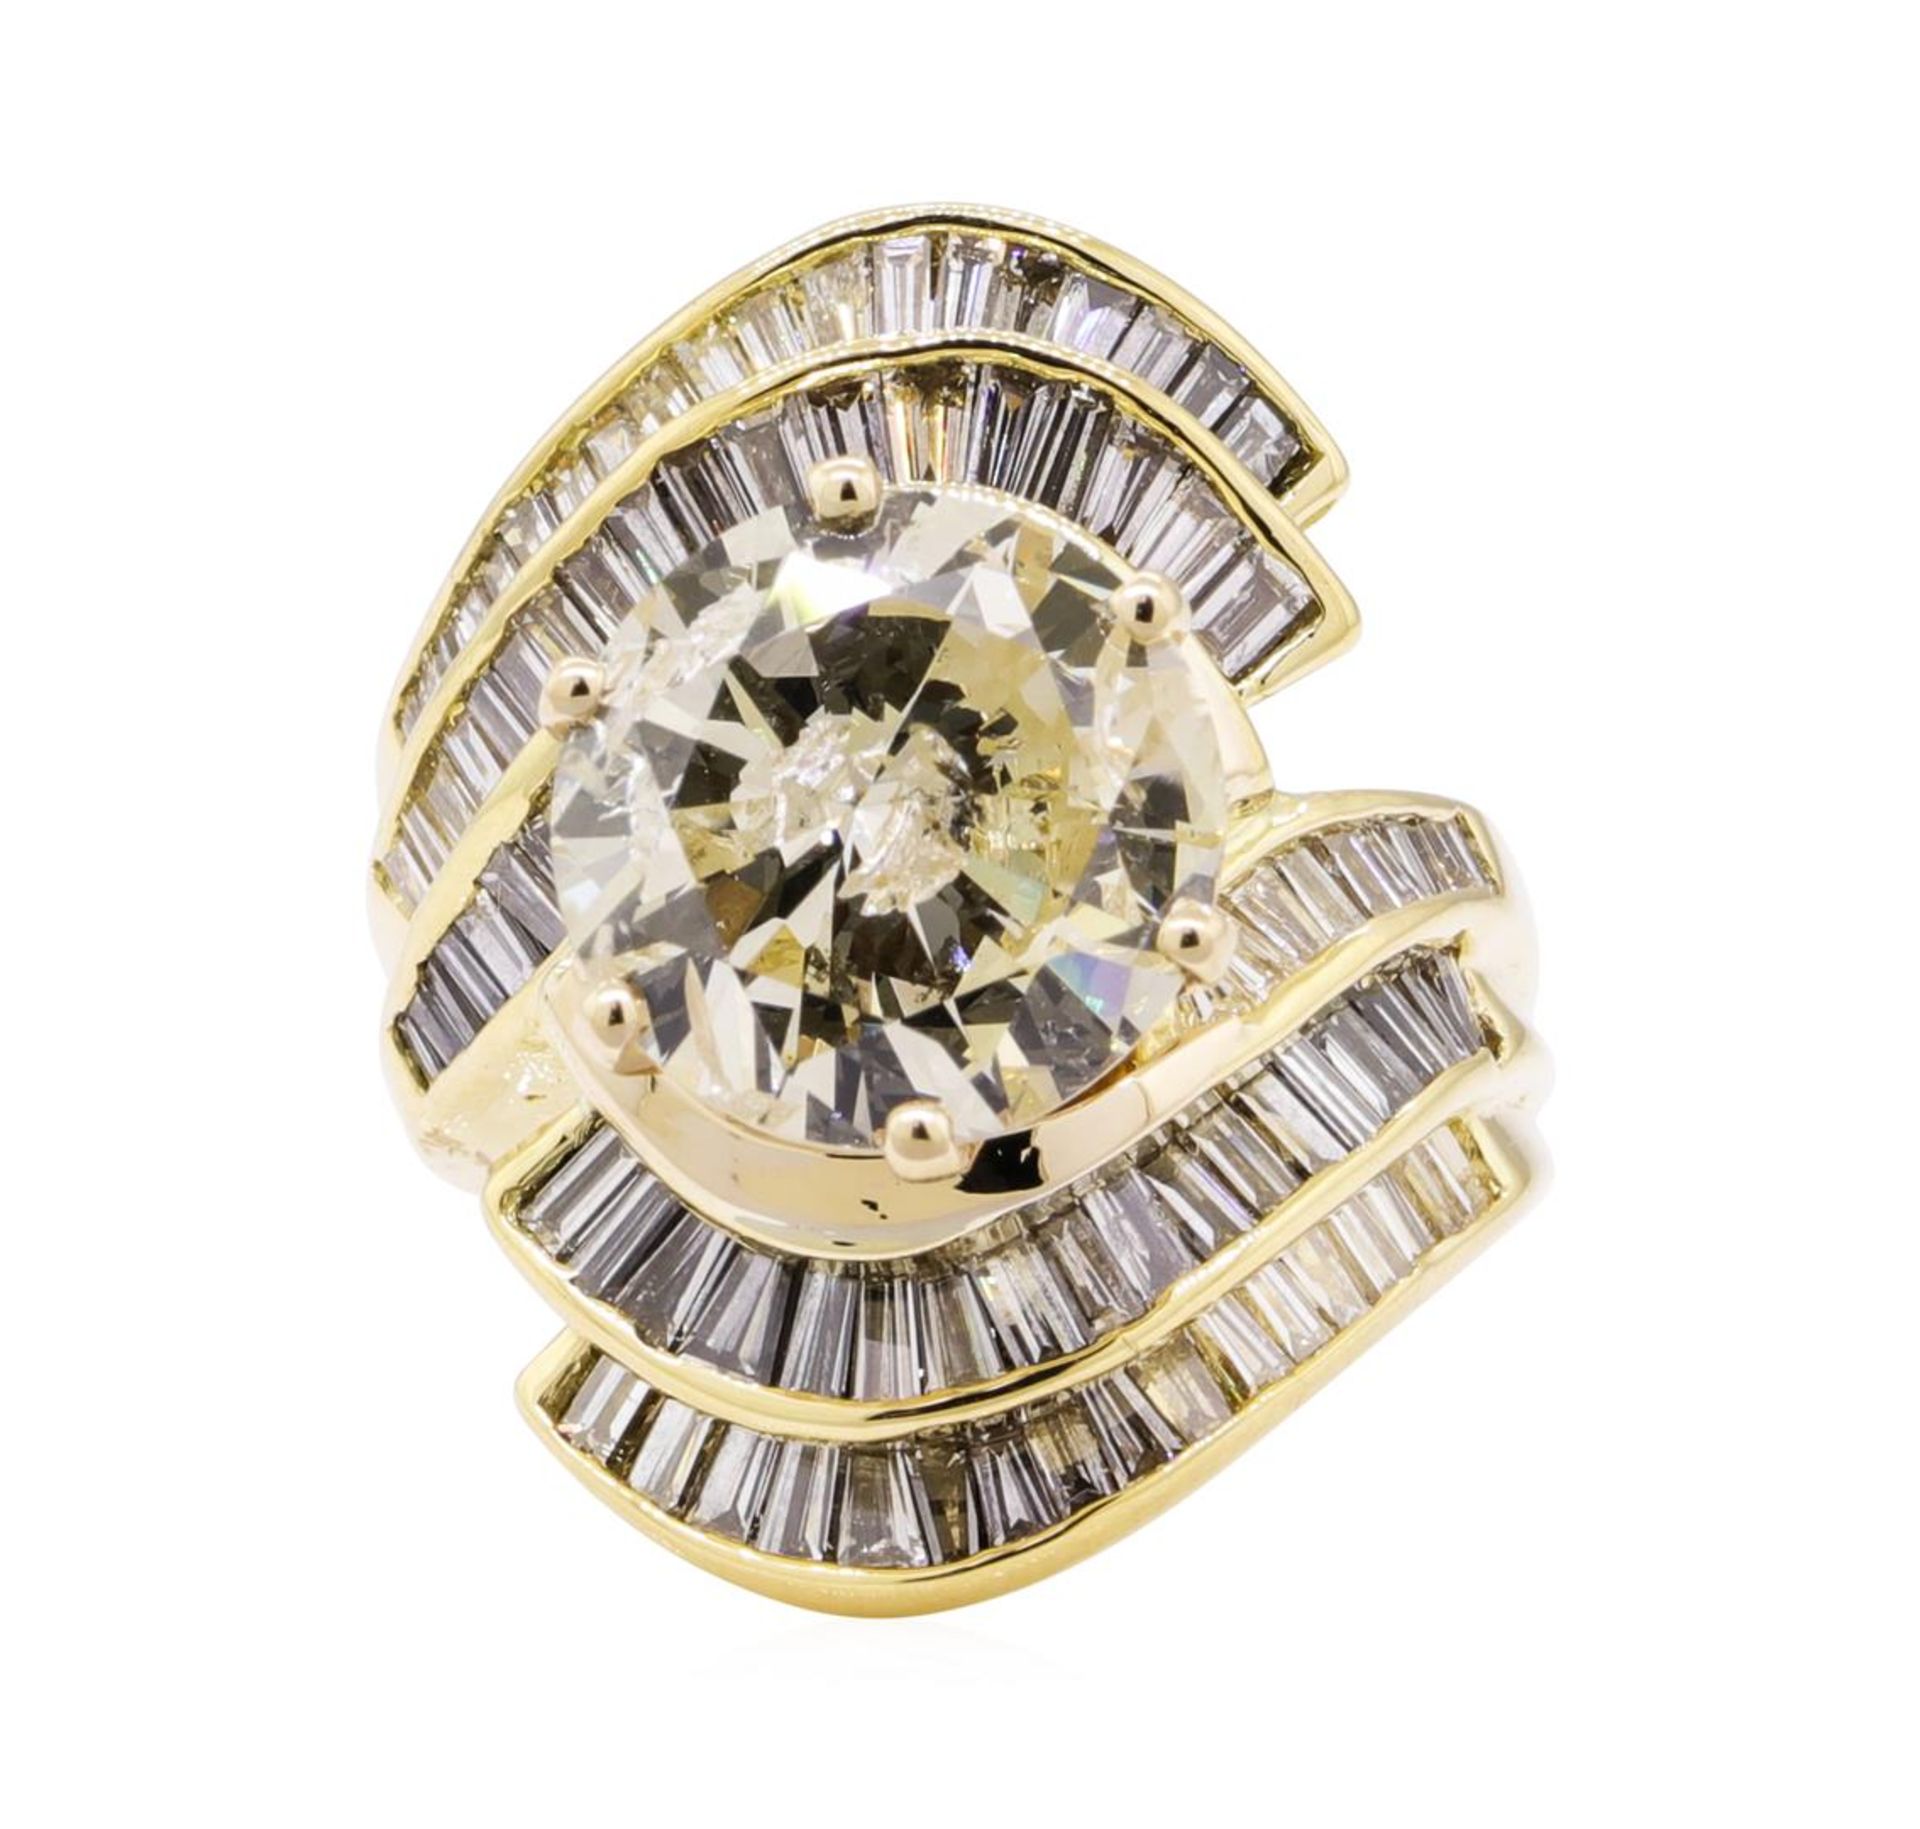 7.51 ctw Diamond Ring - 18KT Yellow Gold - Image 2 of 5